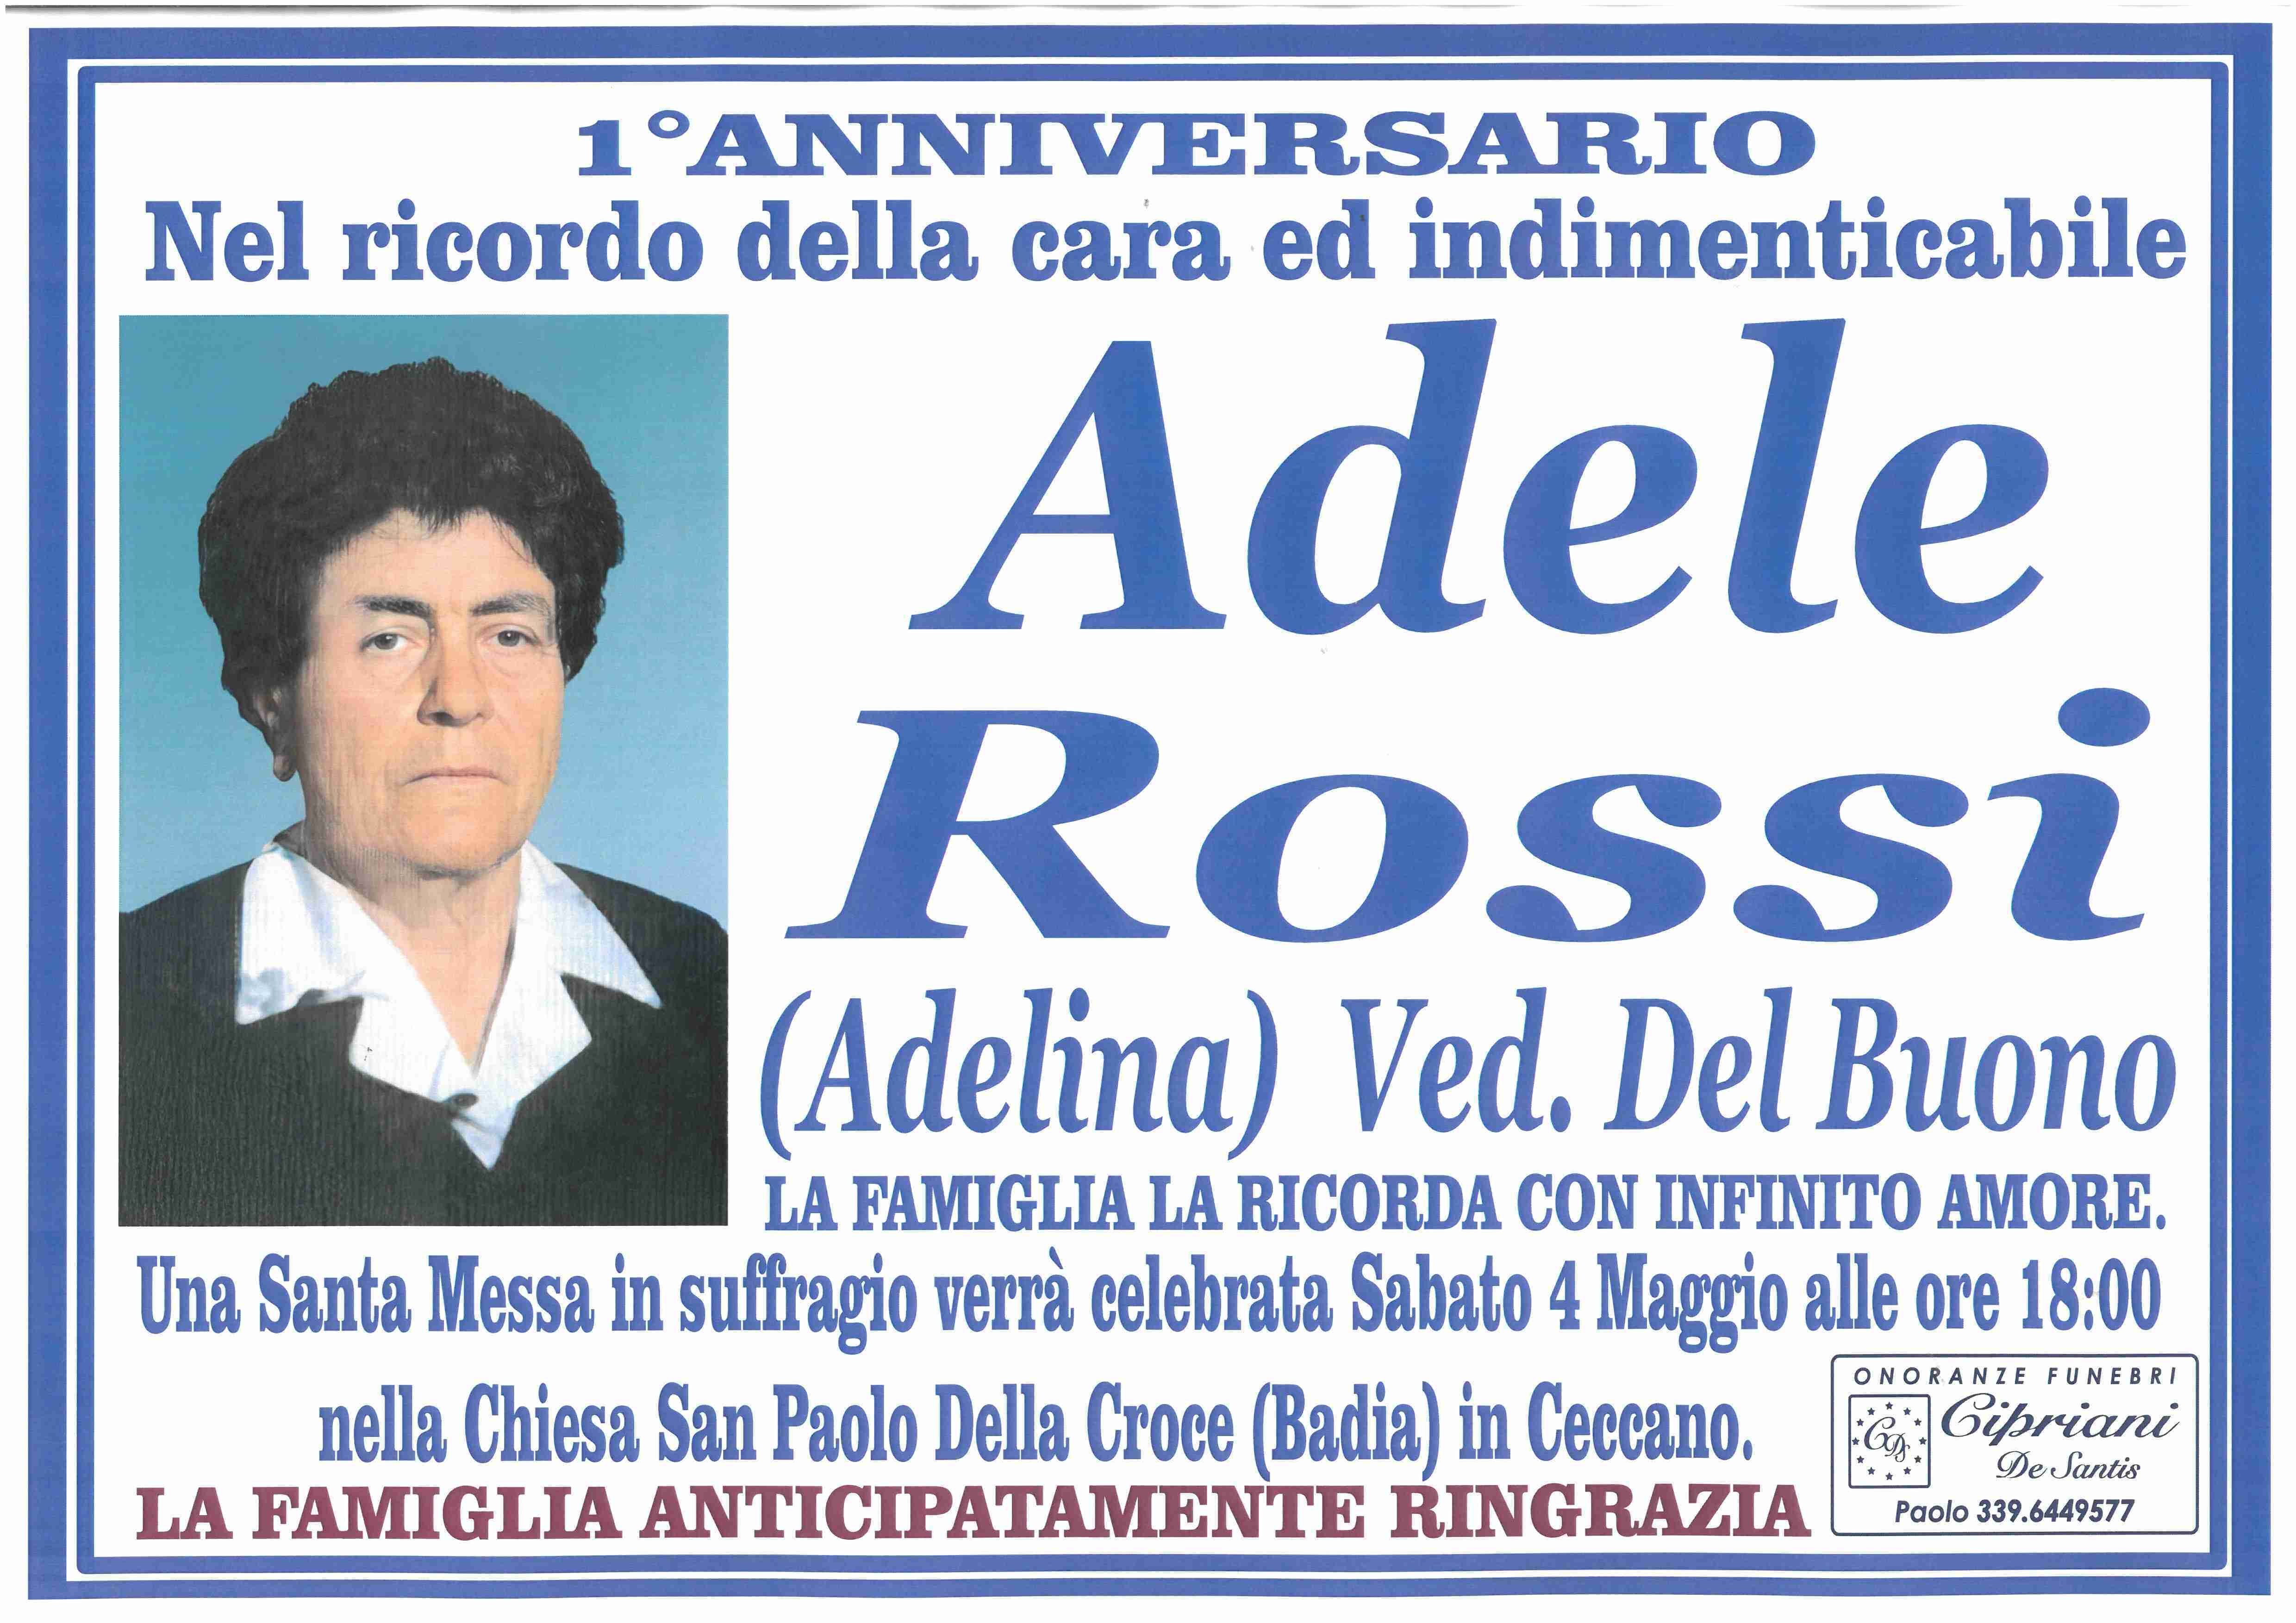 Adele Rossi